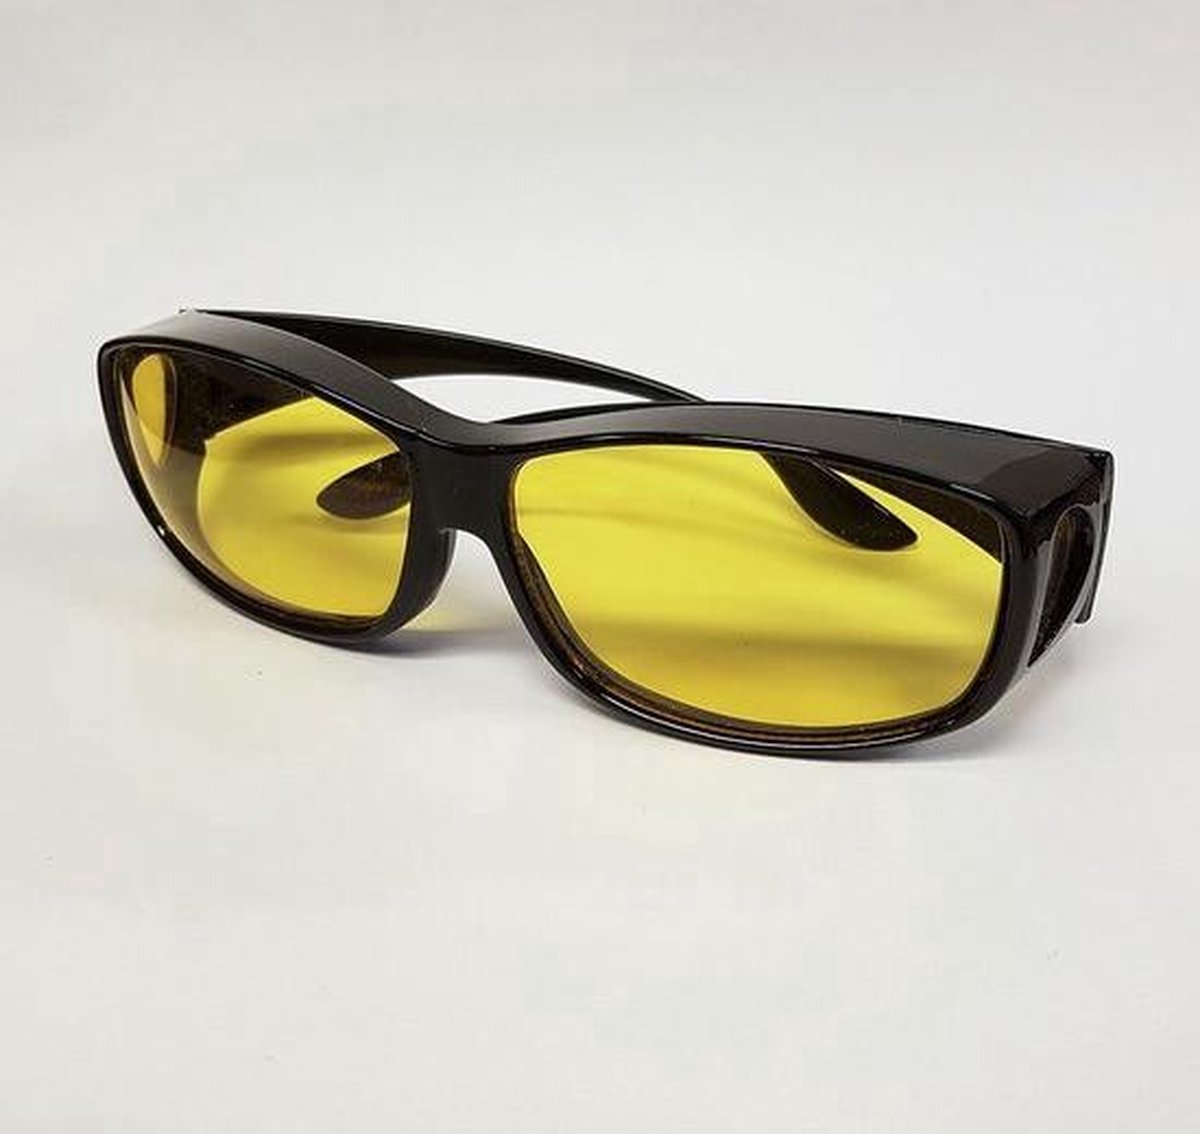 Nachtbril - Mistbril en autobril - Zwart | bol.com